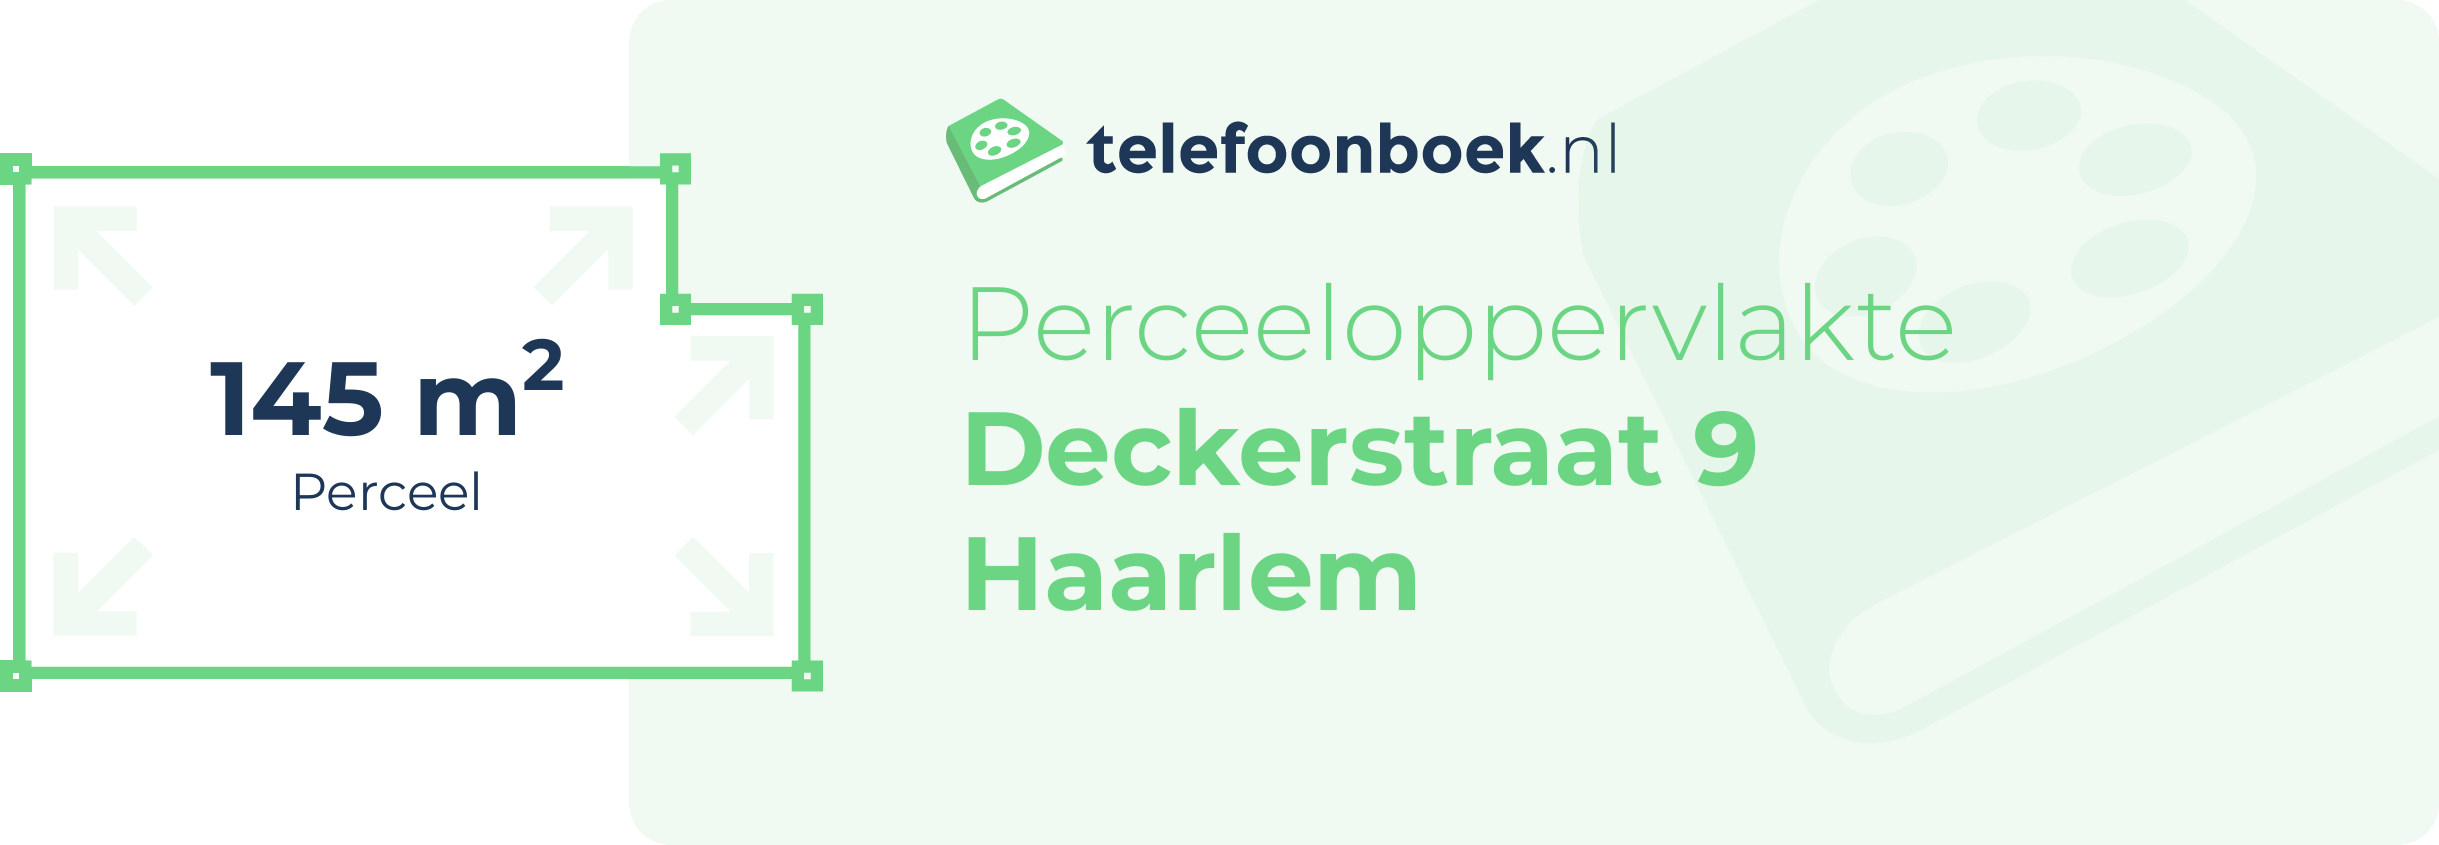 Perceeloppervlakte Deckerstraat 9 Haarlem